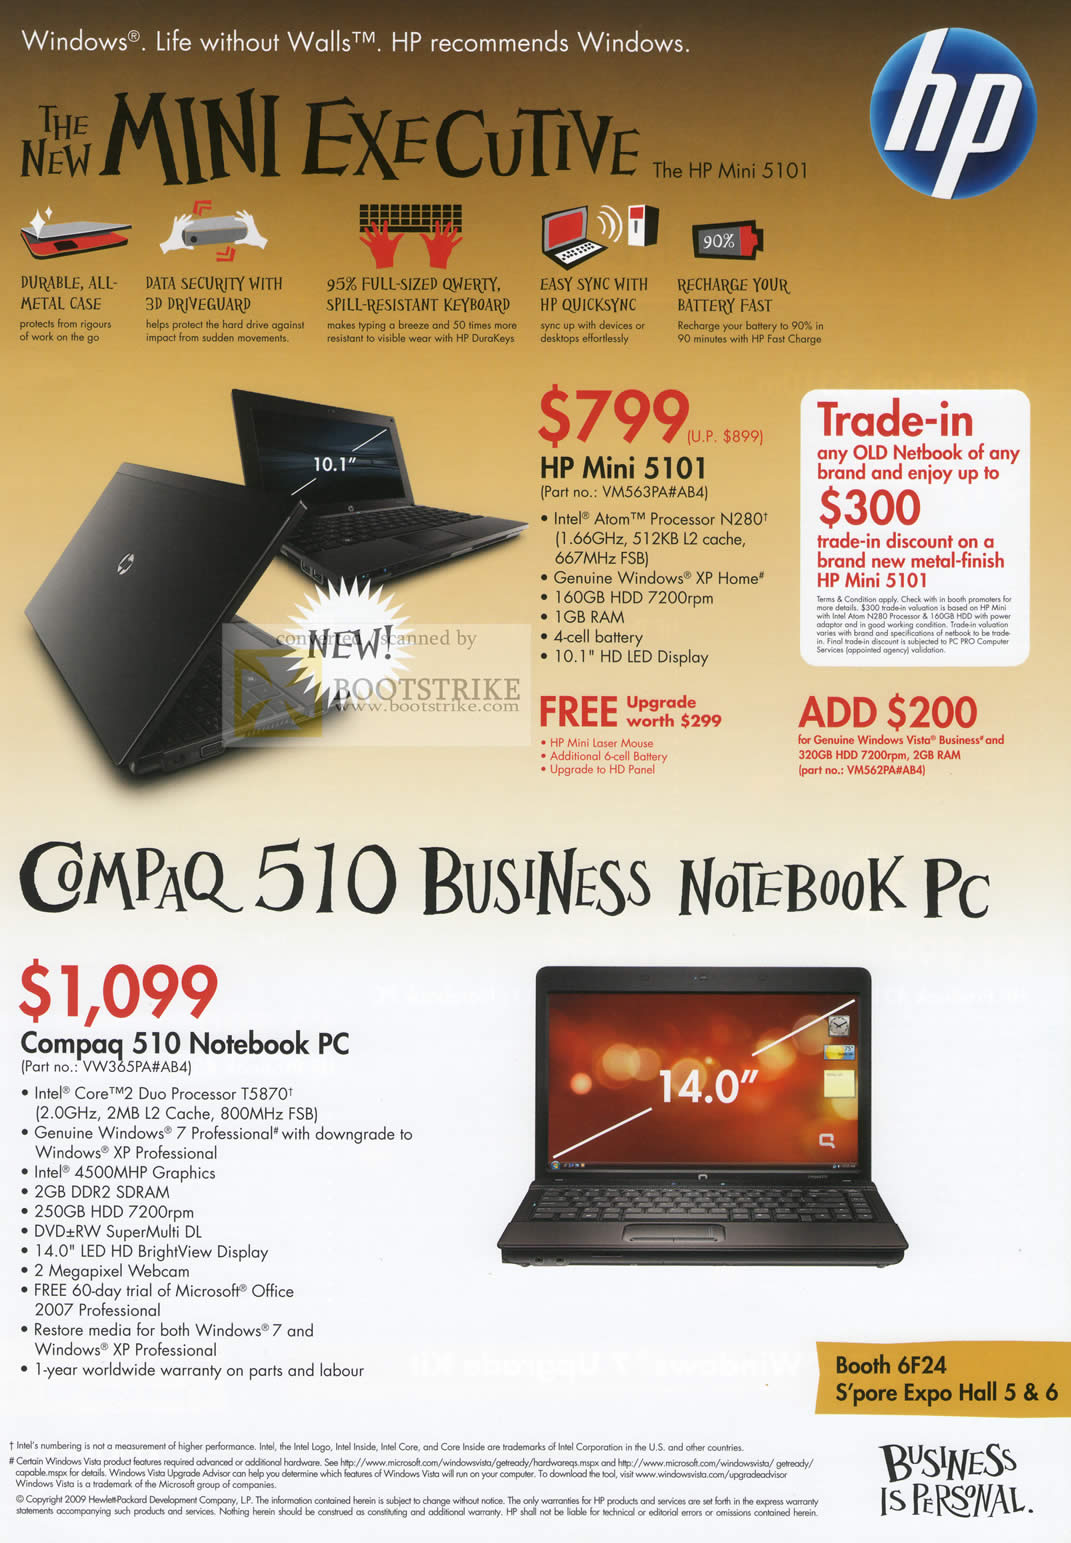 Sitex 2009 price list image brochure of HP Business Mini 5101 Compaq 510 Notebook PC